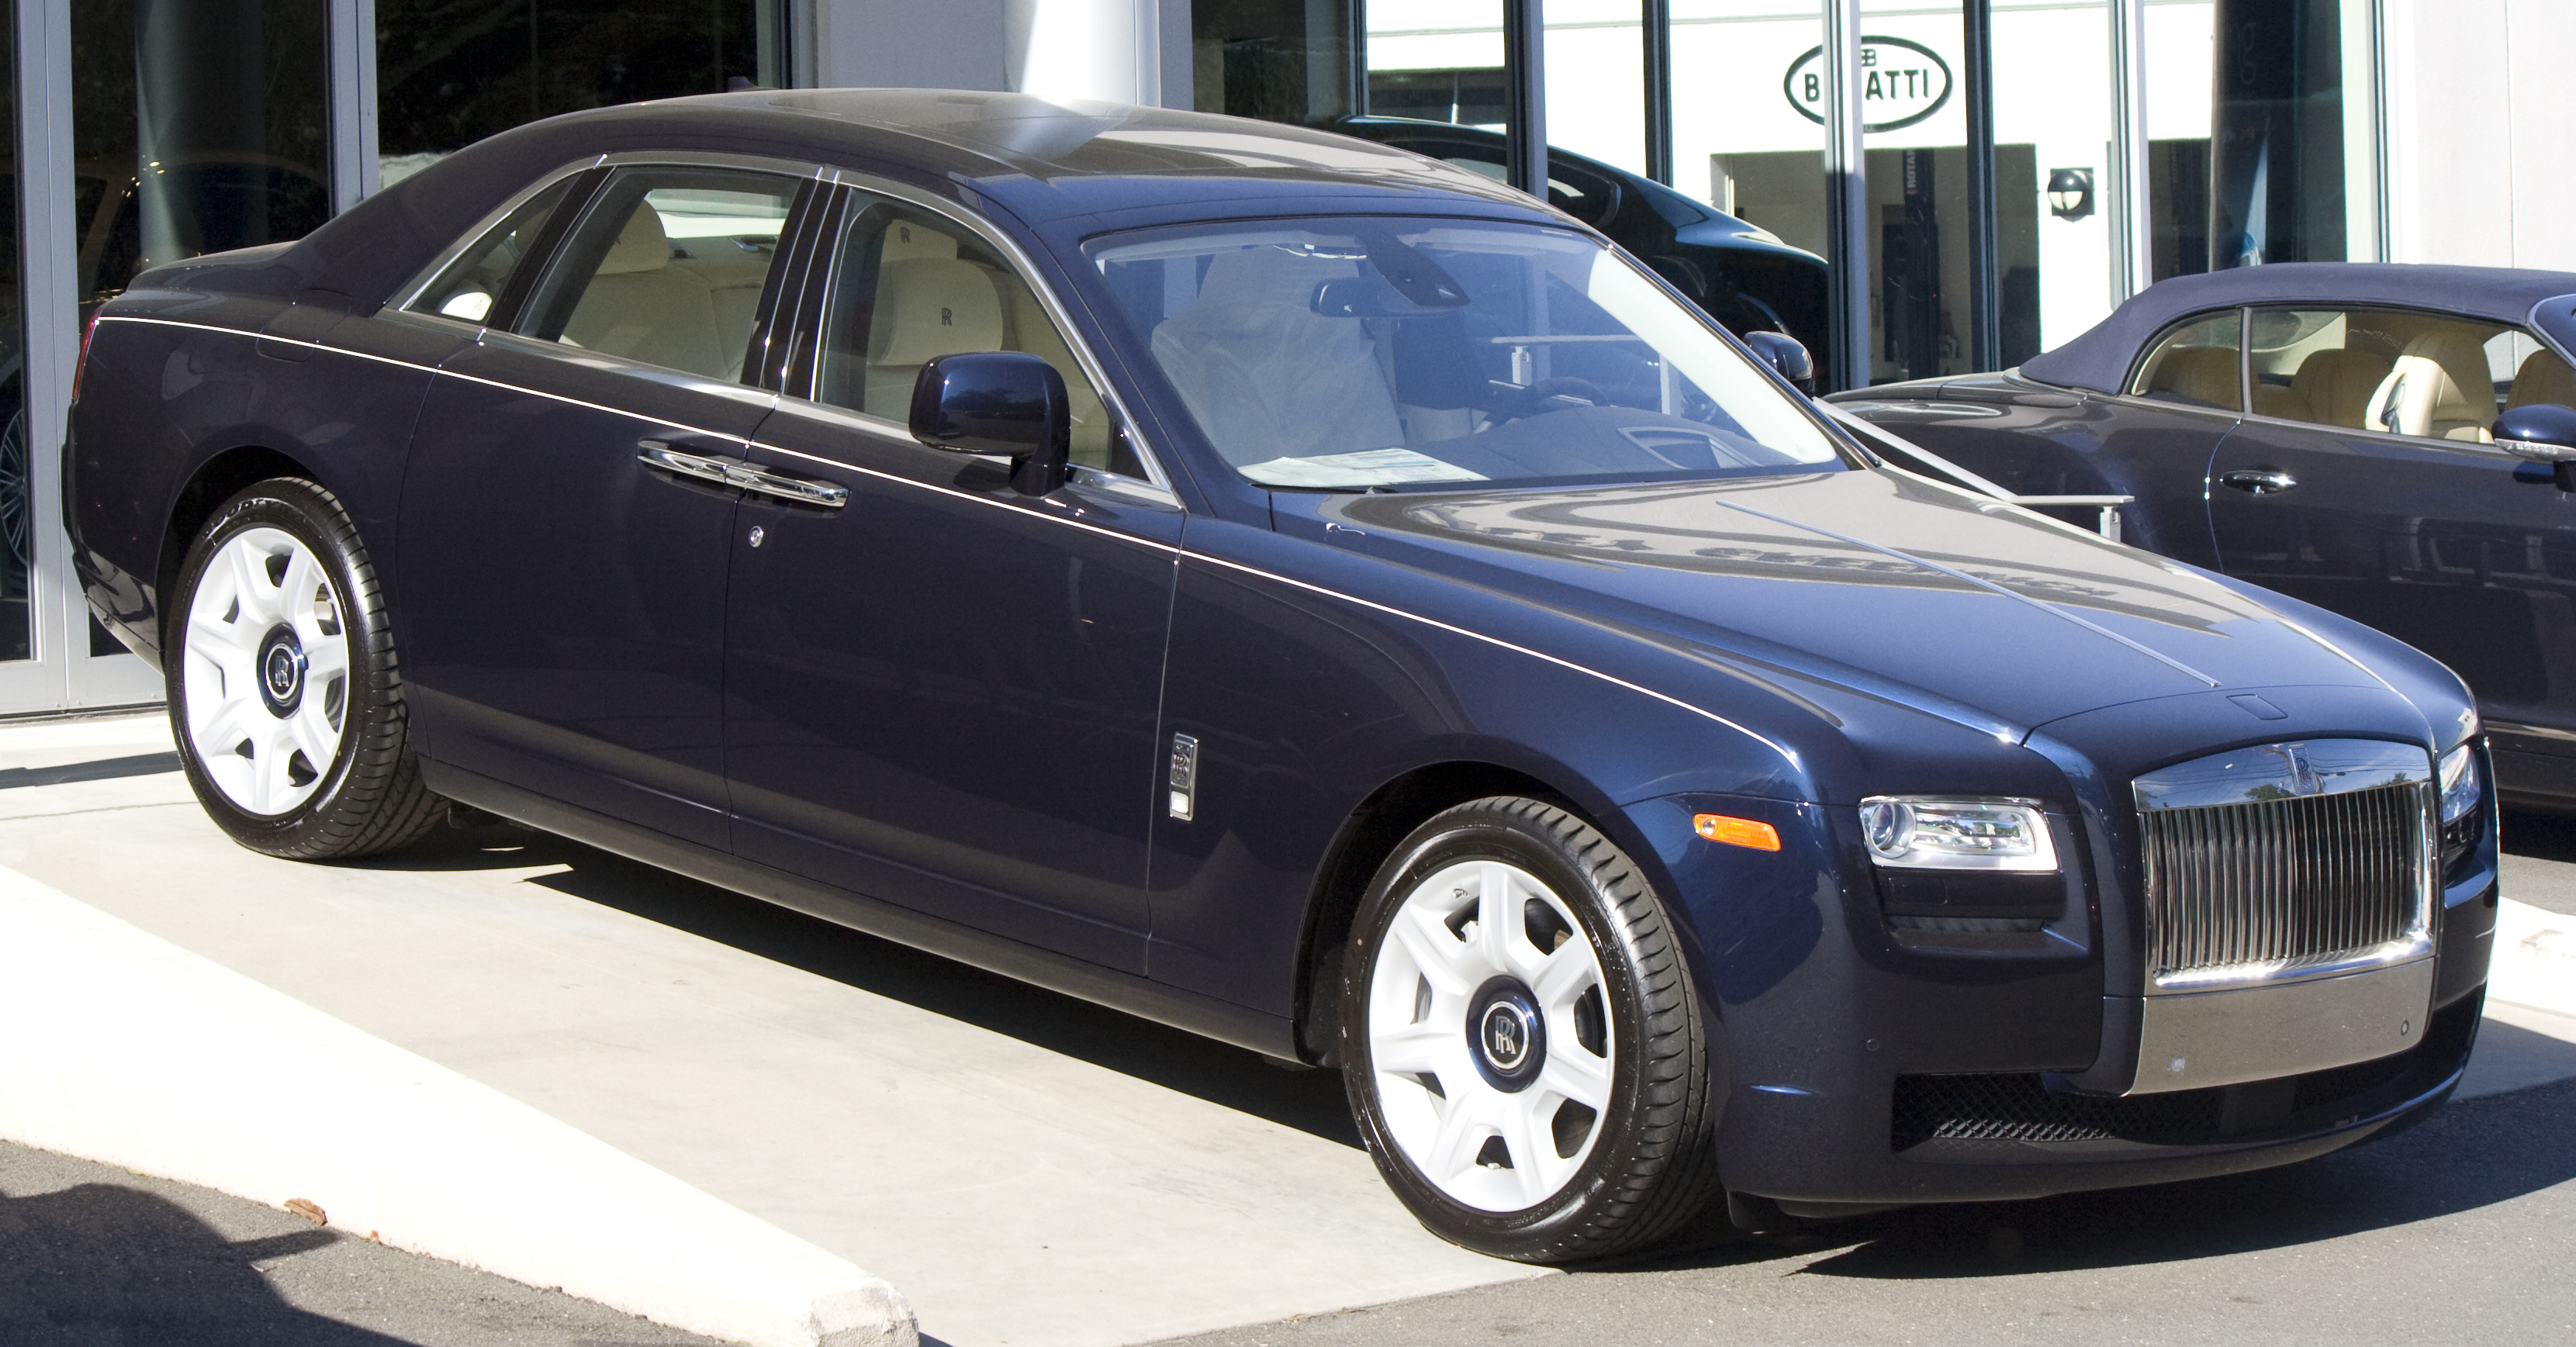 Rolls-Royce отозвал один автомобиль